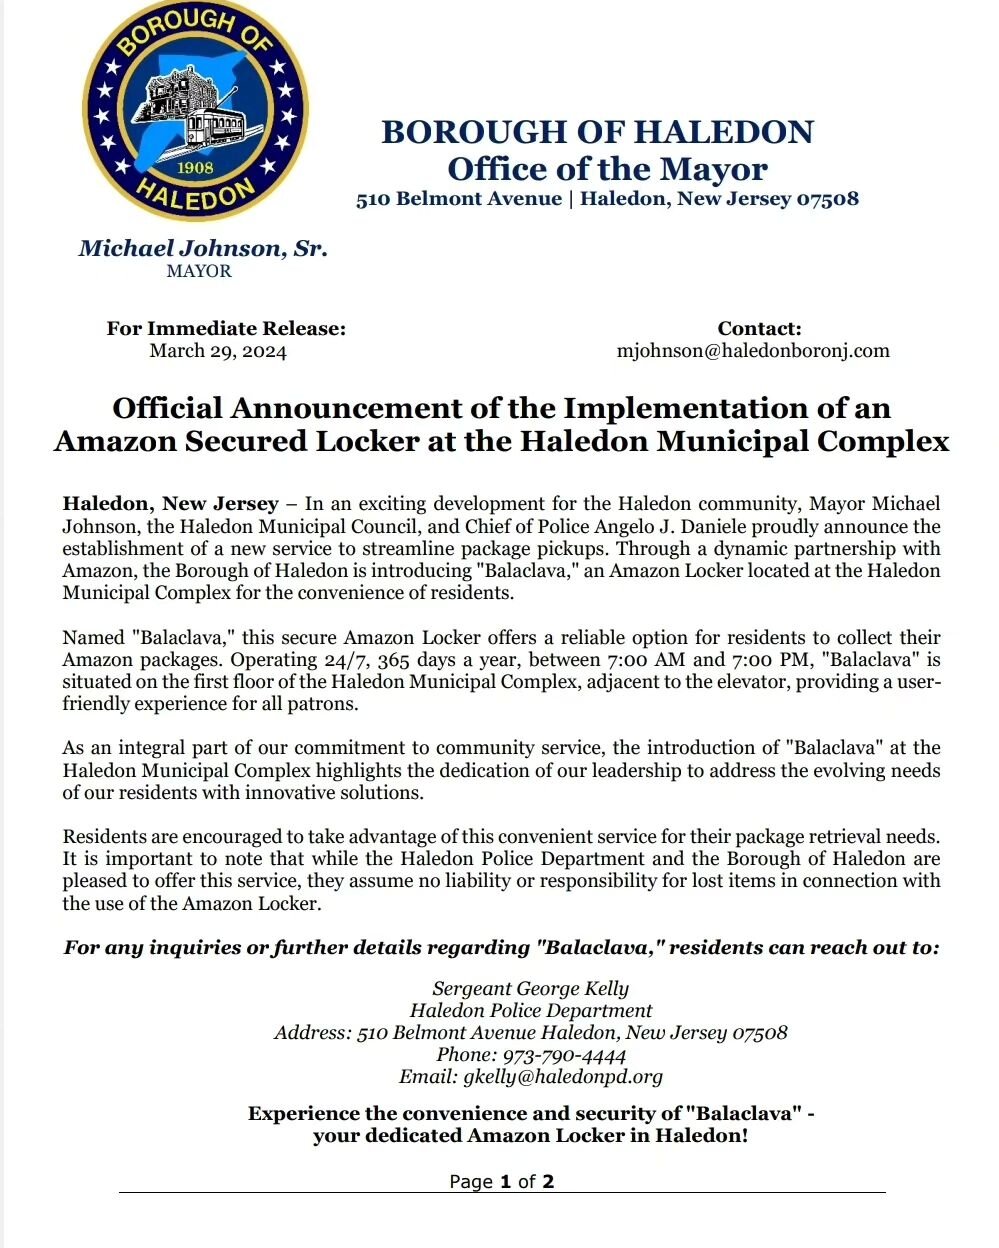 #Haledon Implements Amazon Secured Locker at the Haledon Municipal Complex 

#OurCommunity